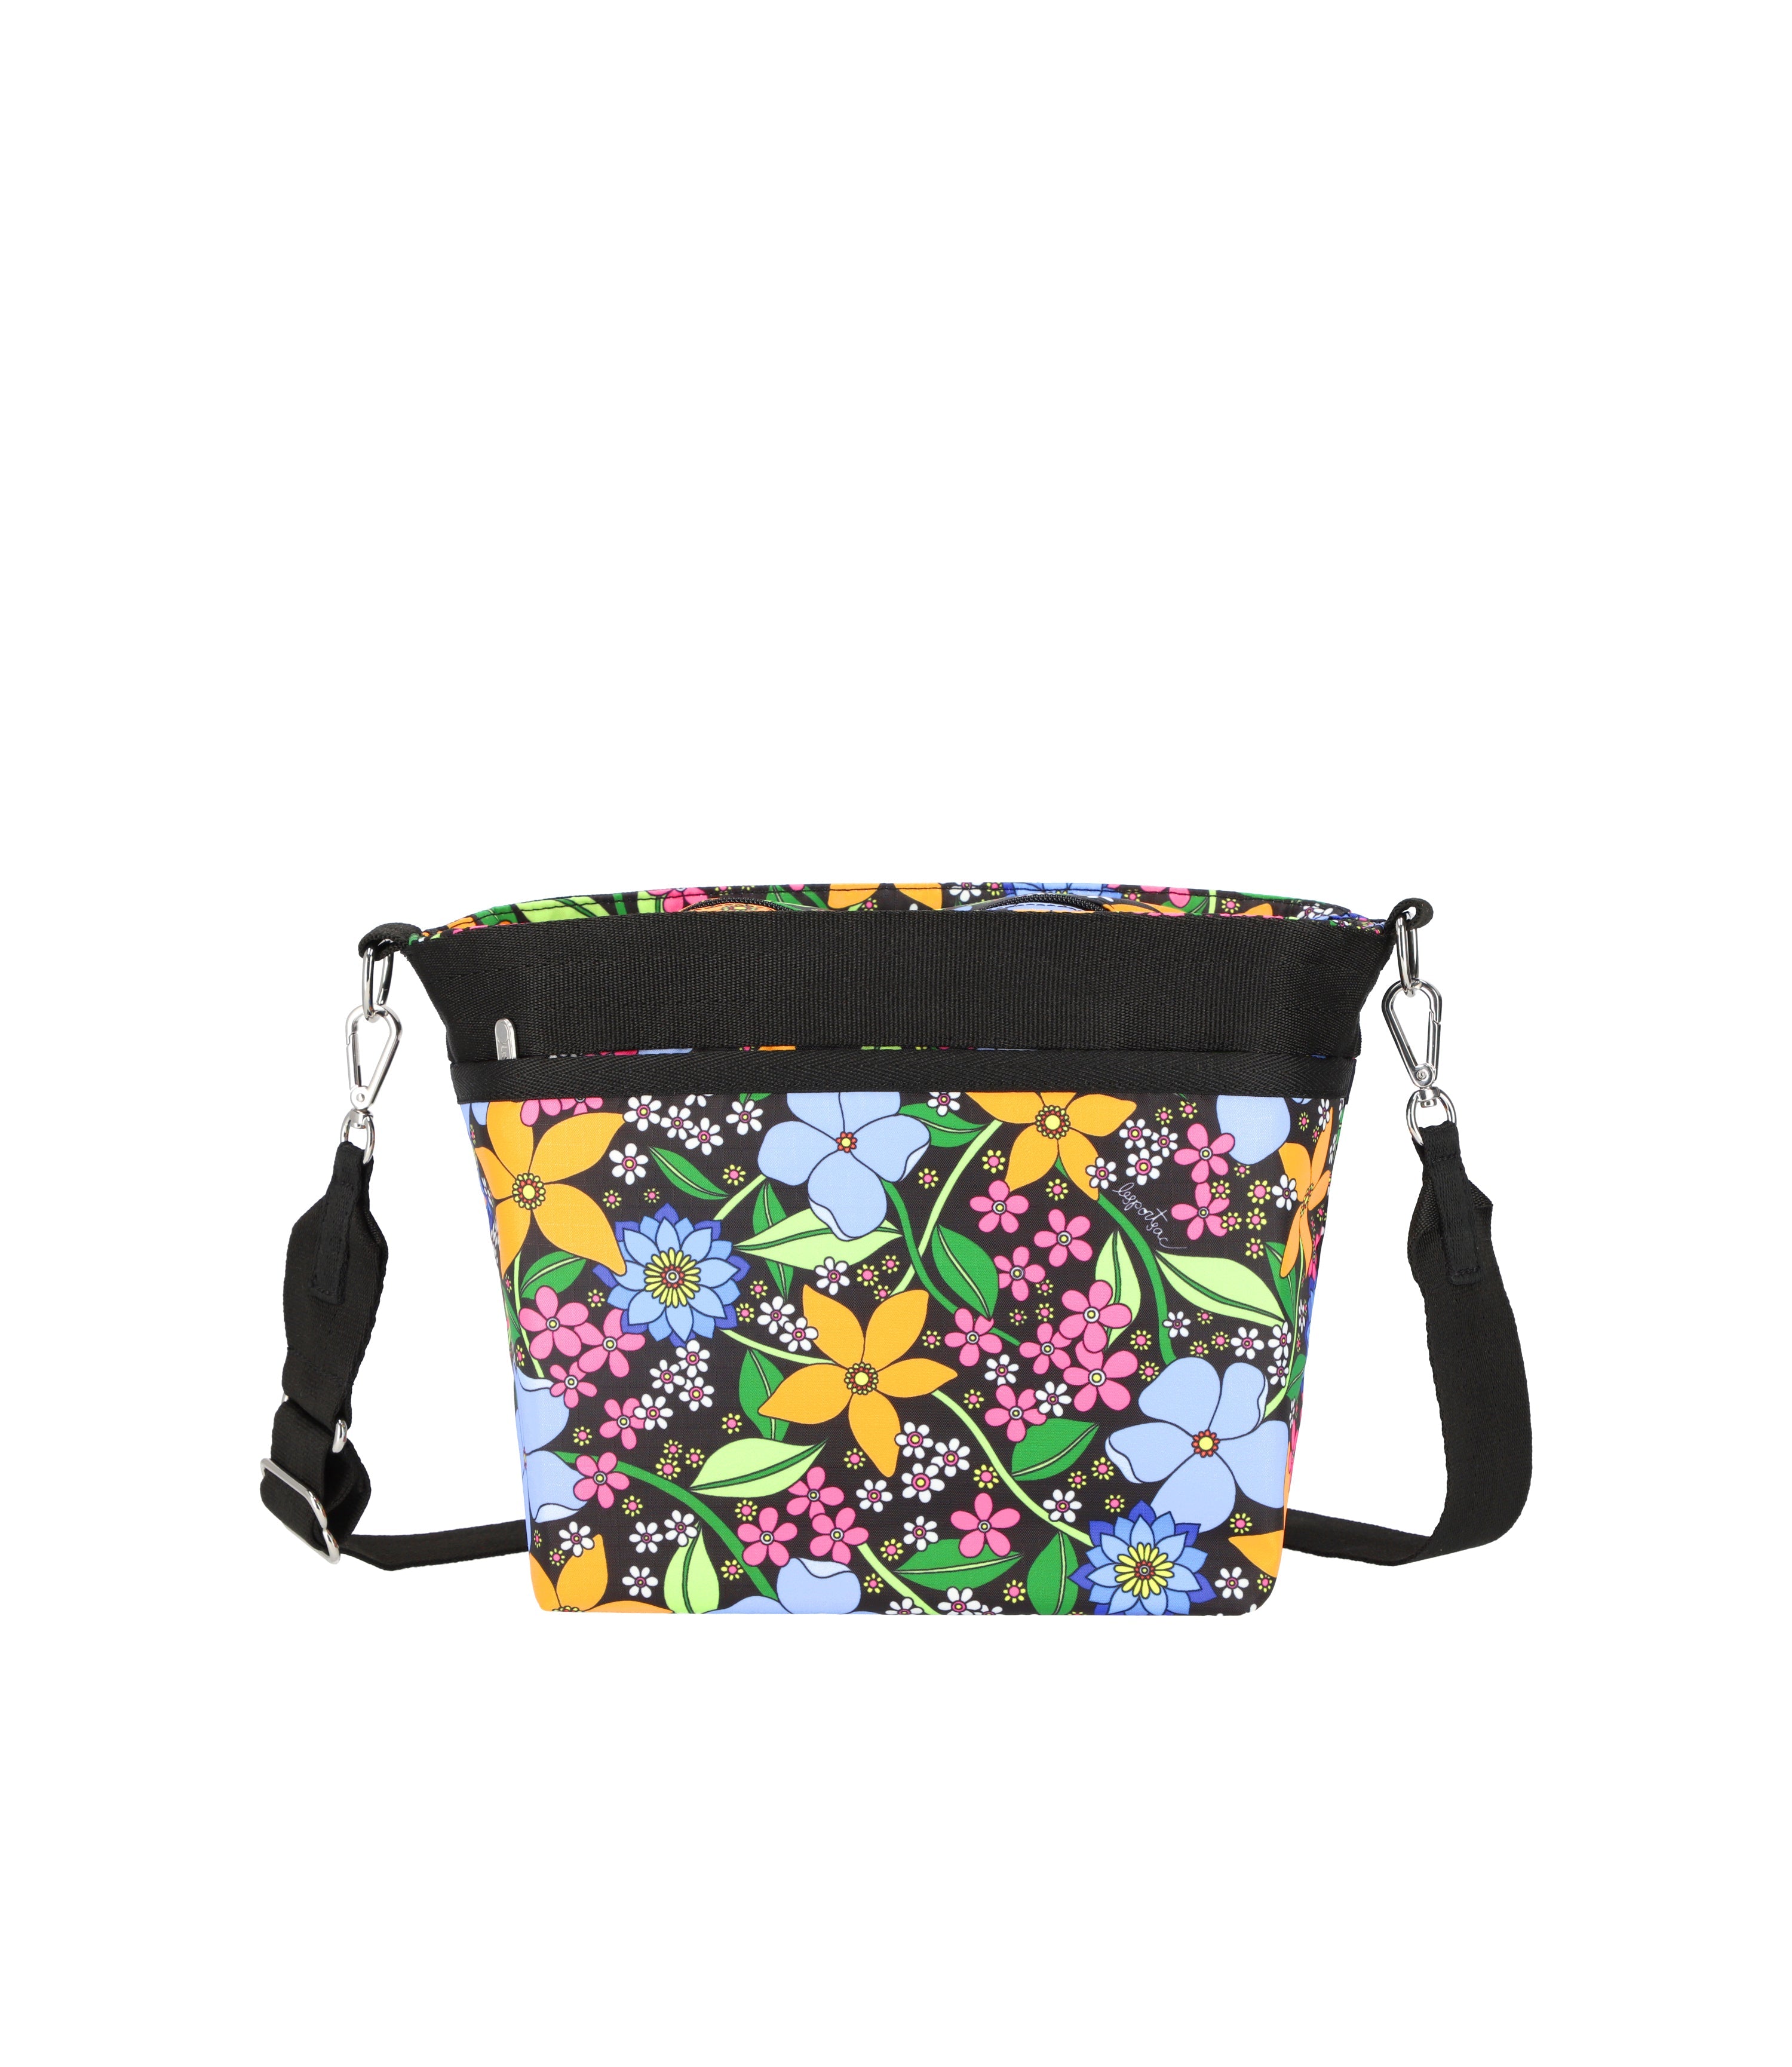 Lesportsac Small Bucket Bag - Sydney Floral Print